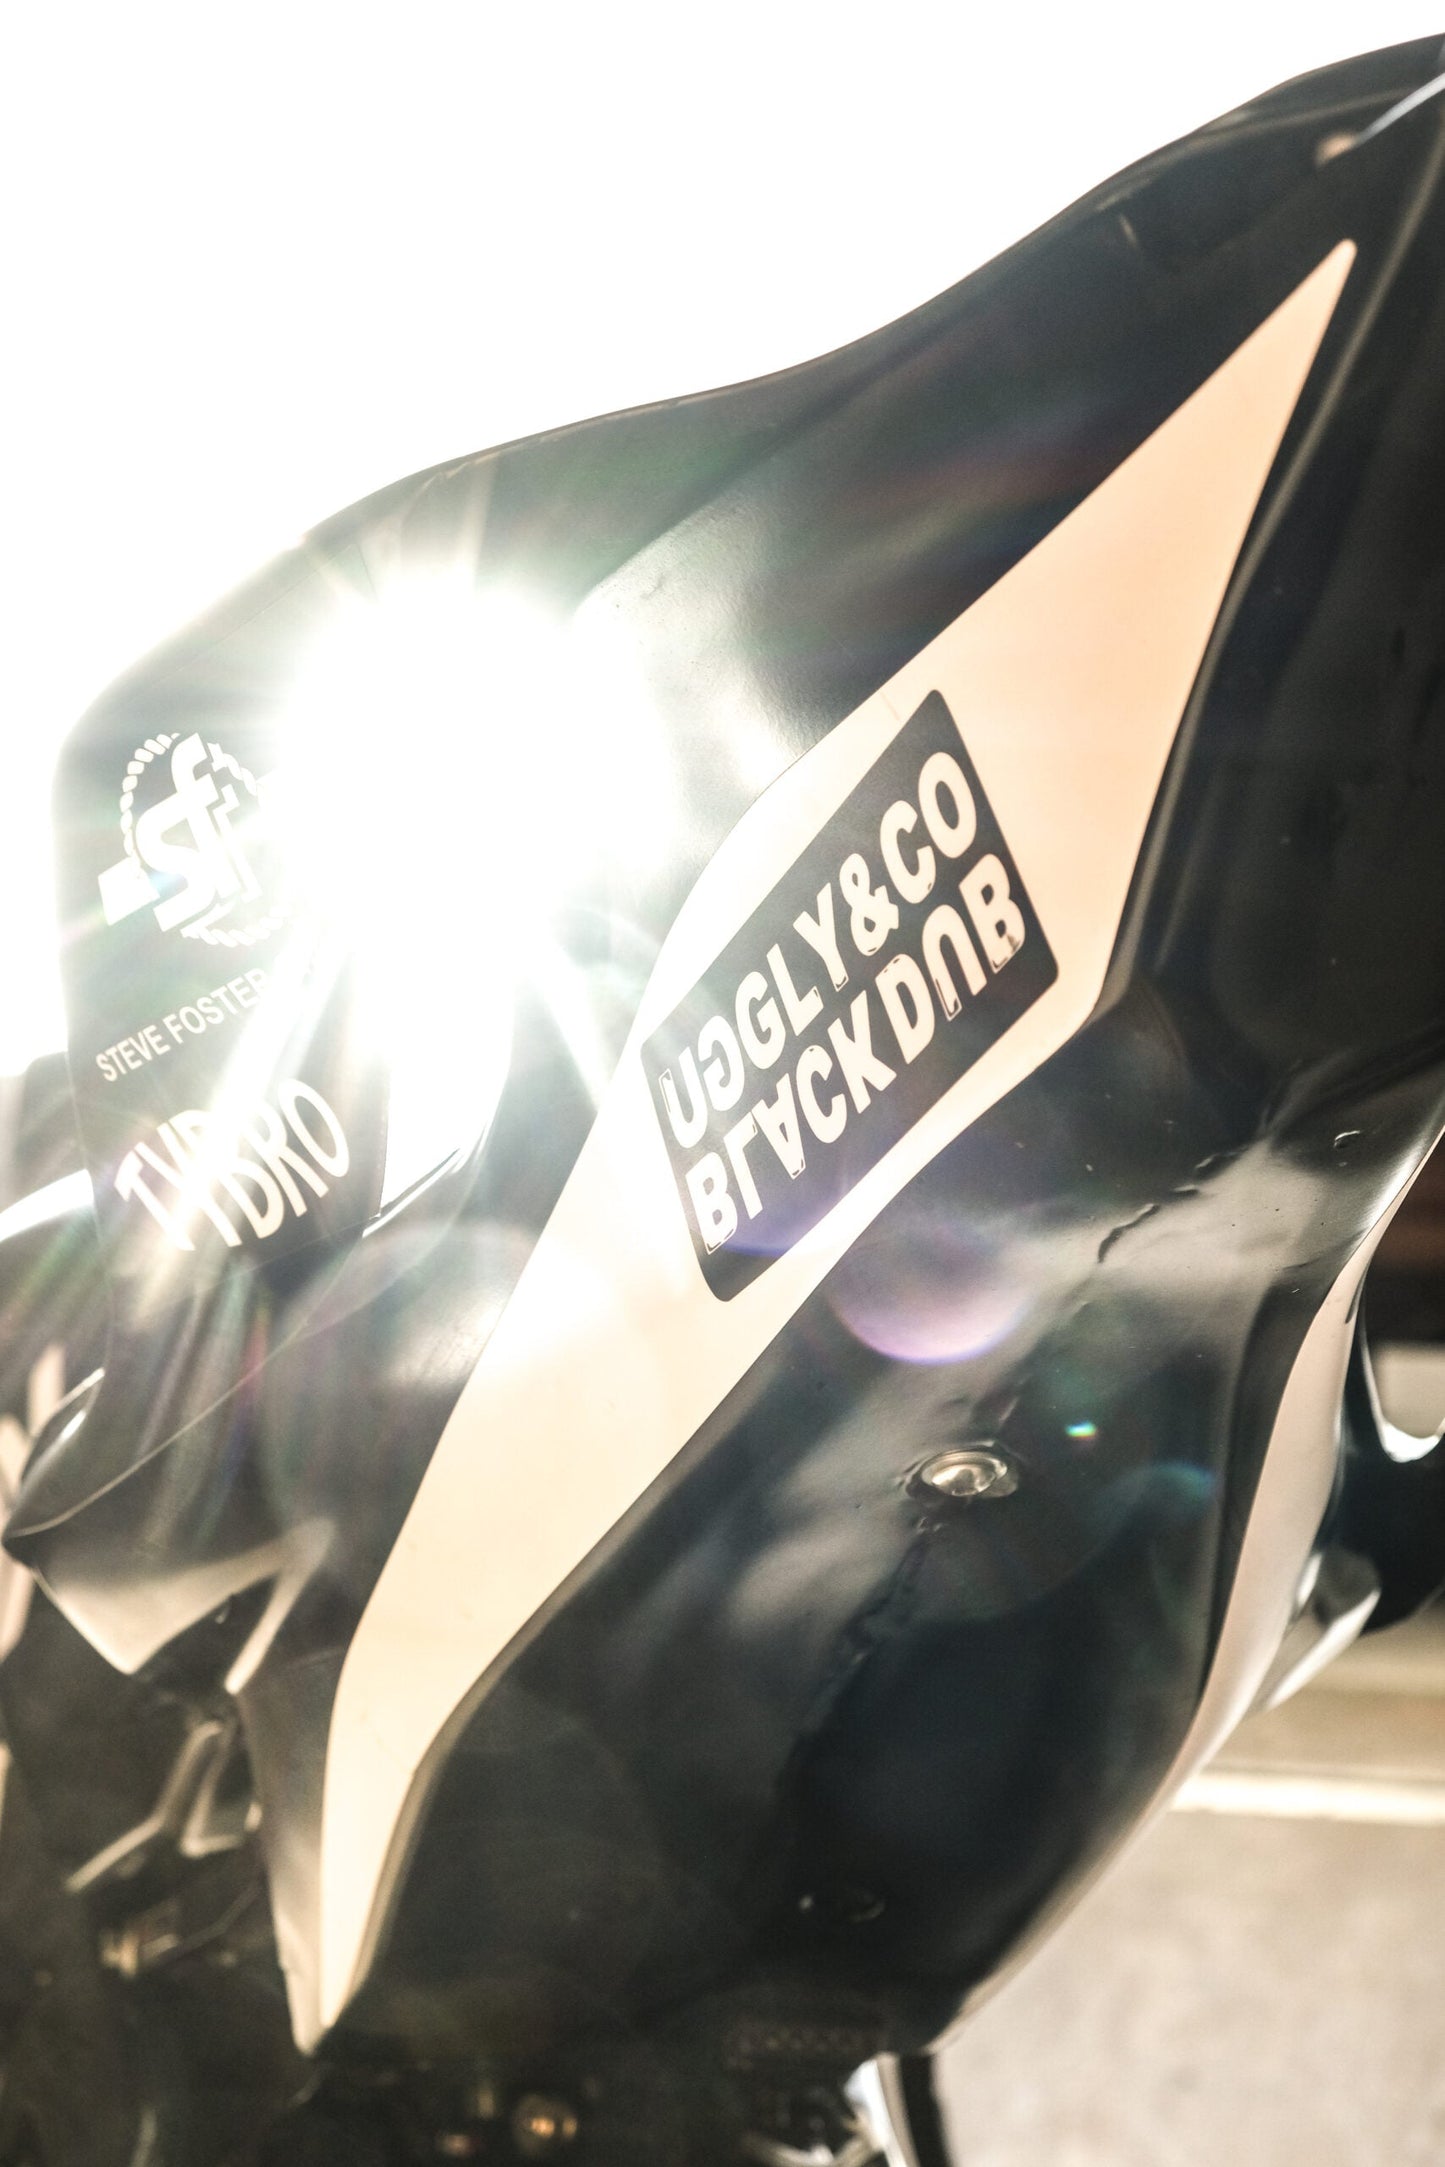 Binch Racing Carl Cox Motorsport Bike livery in black and white